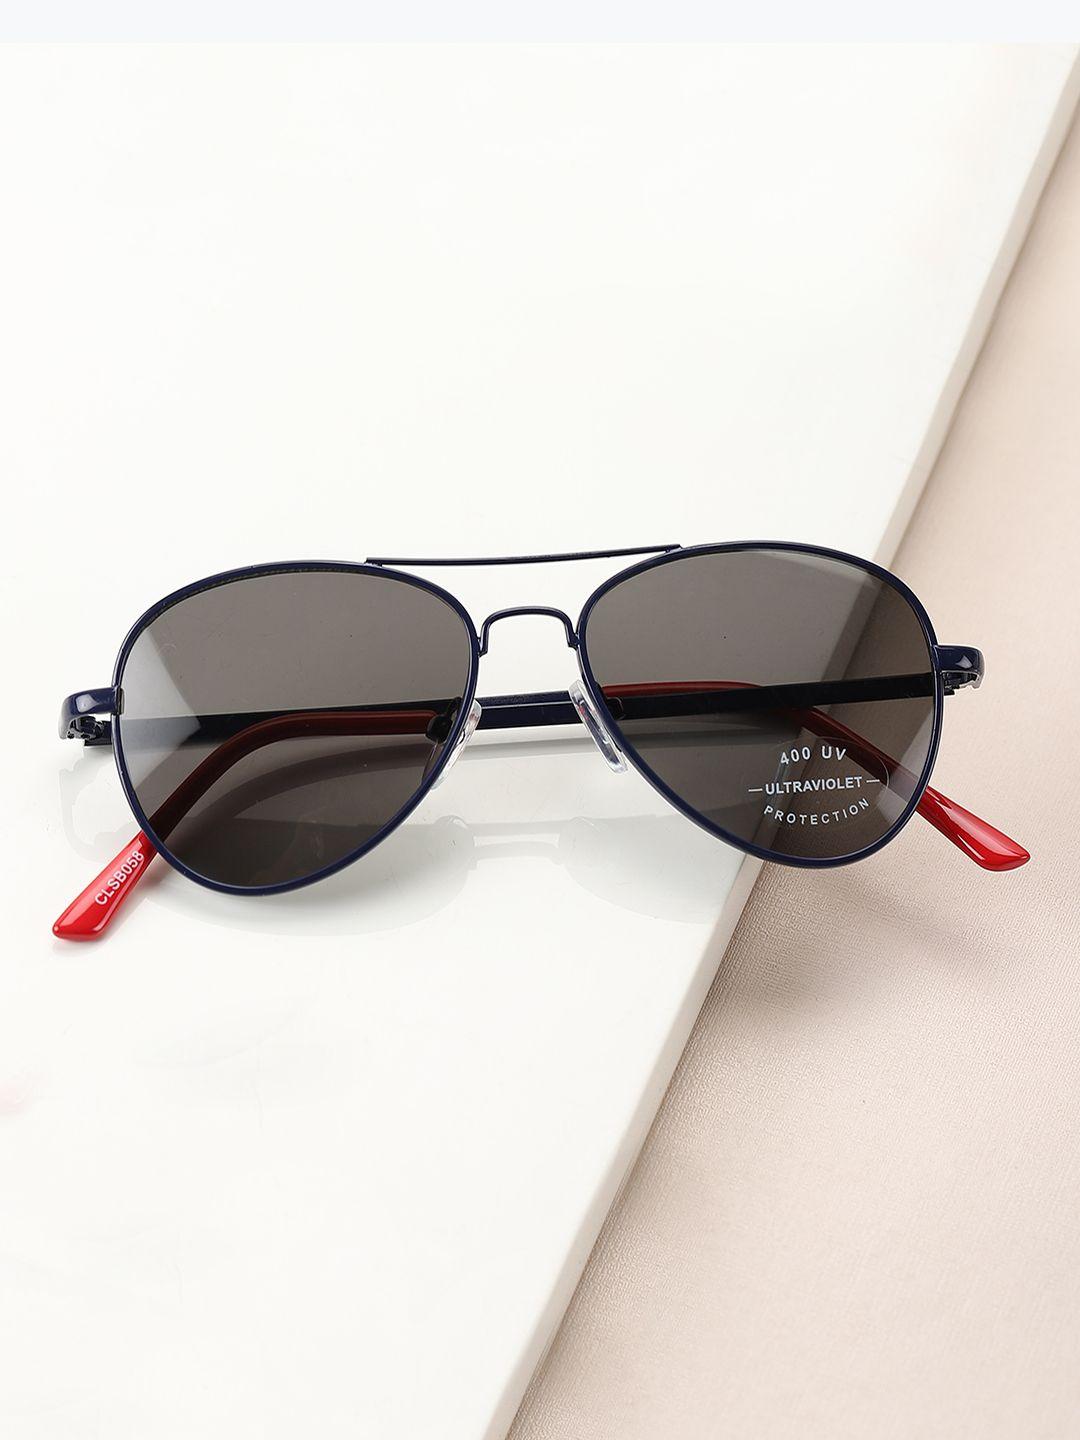 carlton-london-boys-black-lens-&-blue-aviator-sunglasses-with-uv-protected-lens